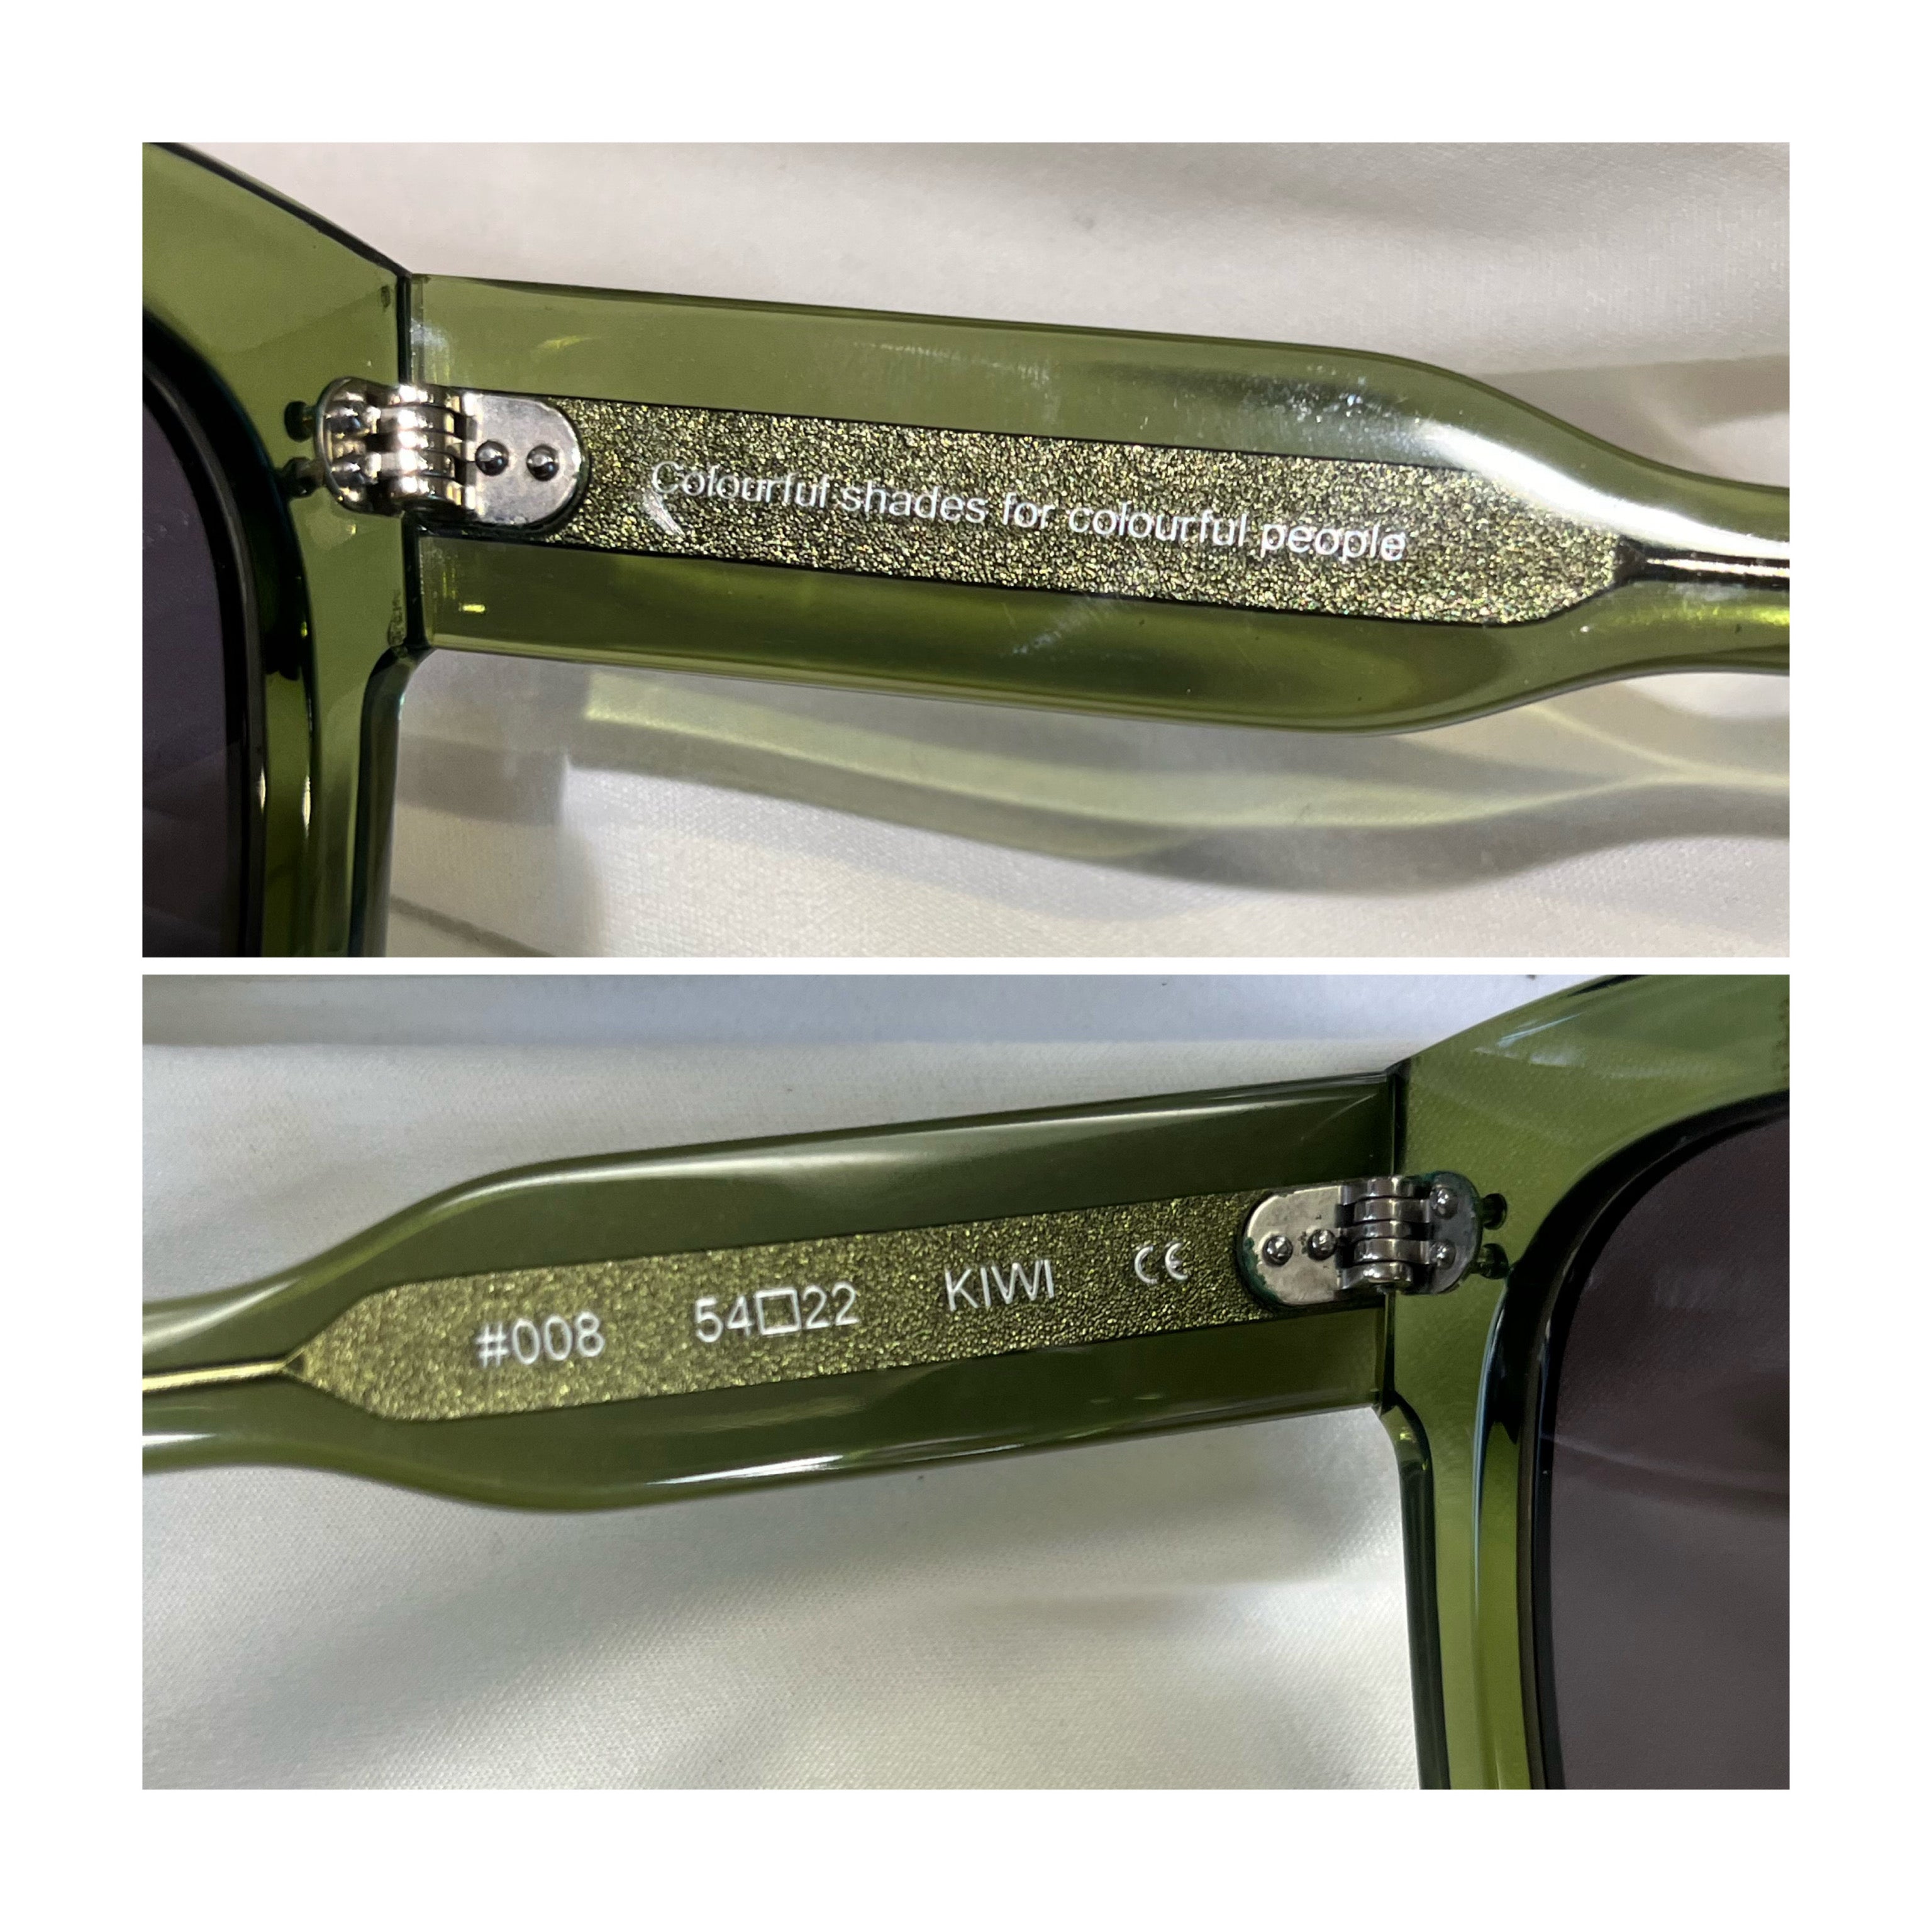 Chimi kiwi green 08 sunglasses